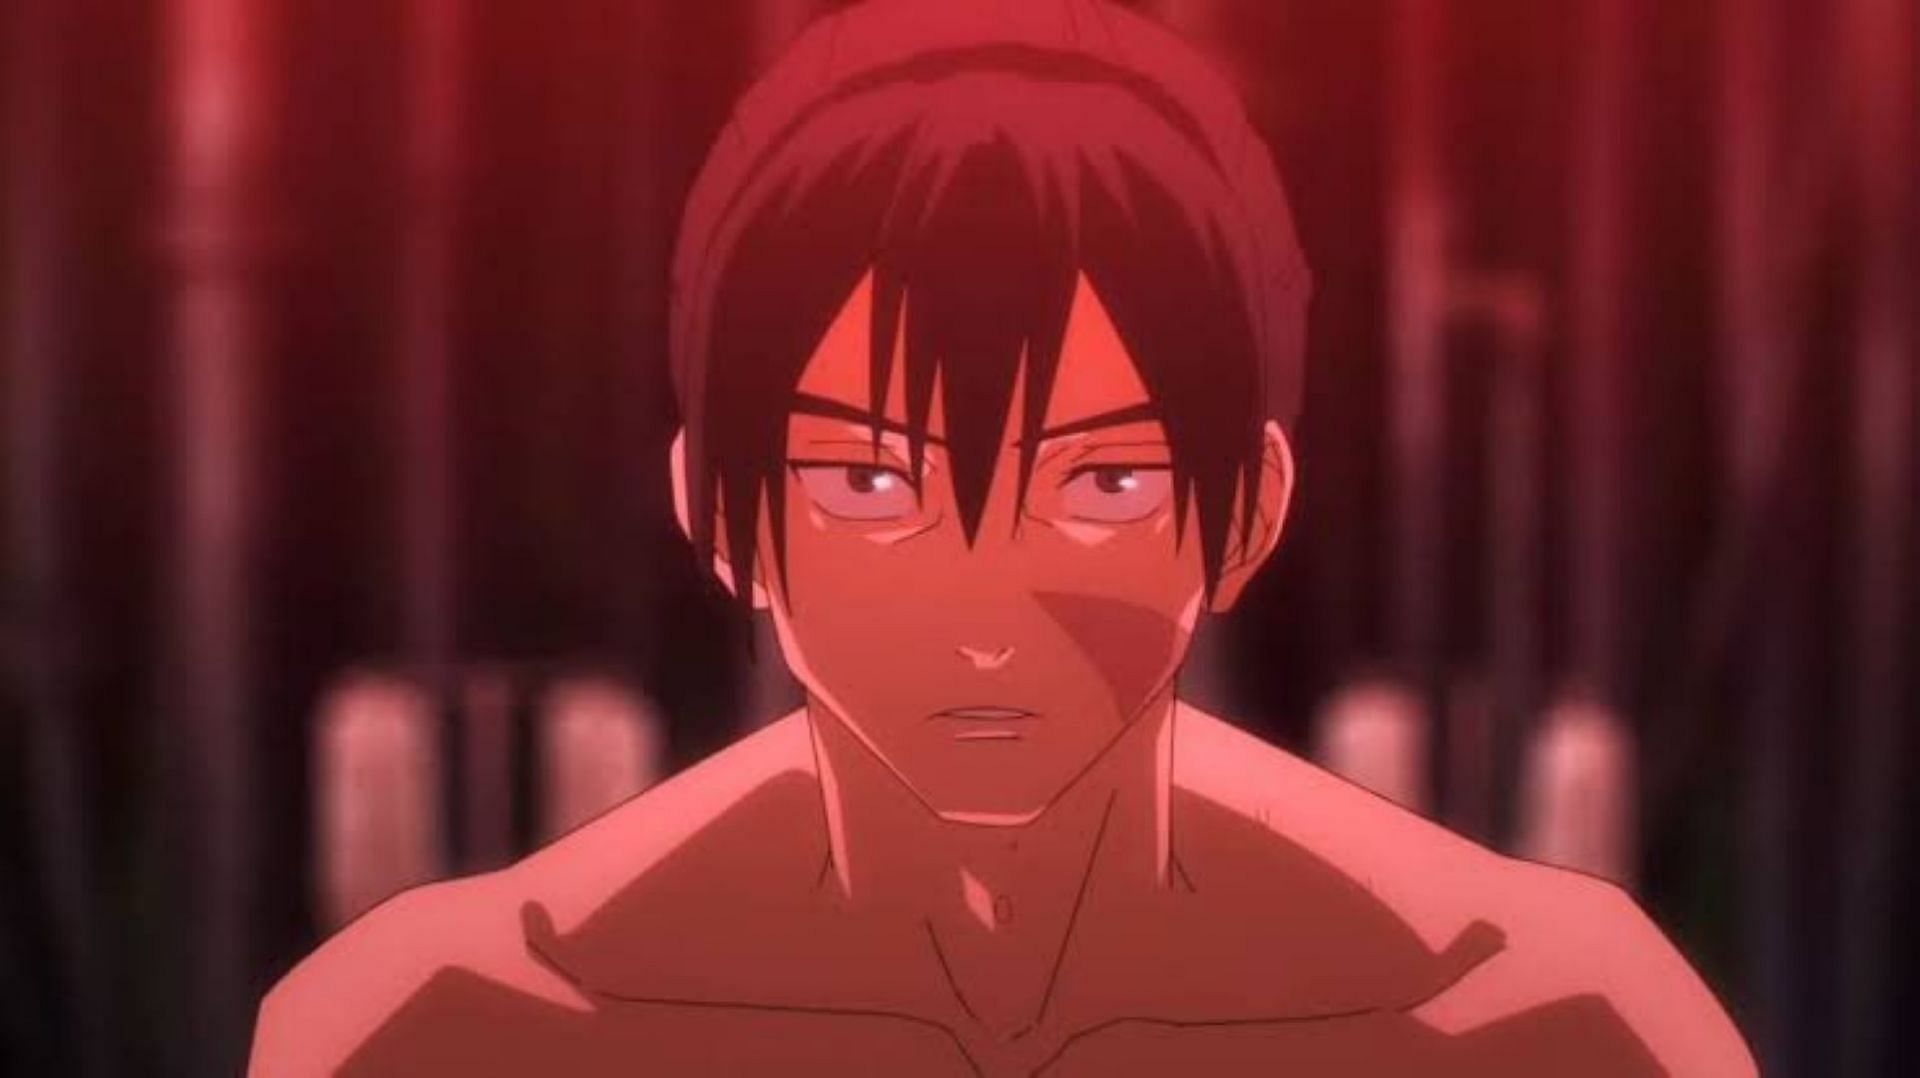 Kokichi as seen in the anime (Image via MAPPA)